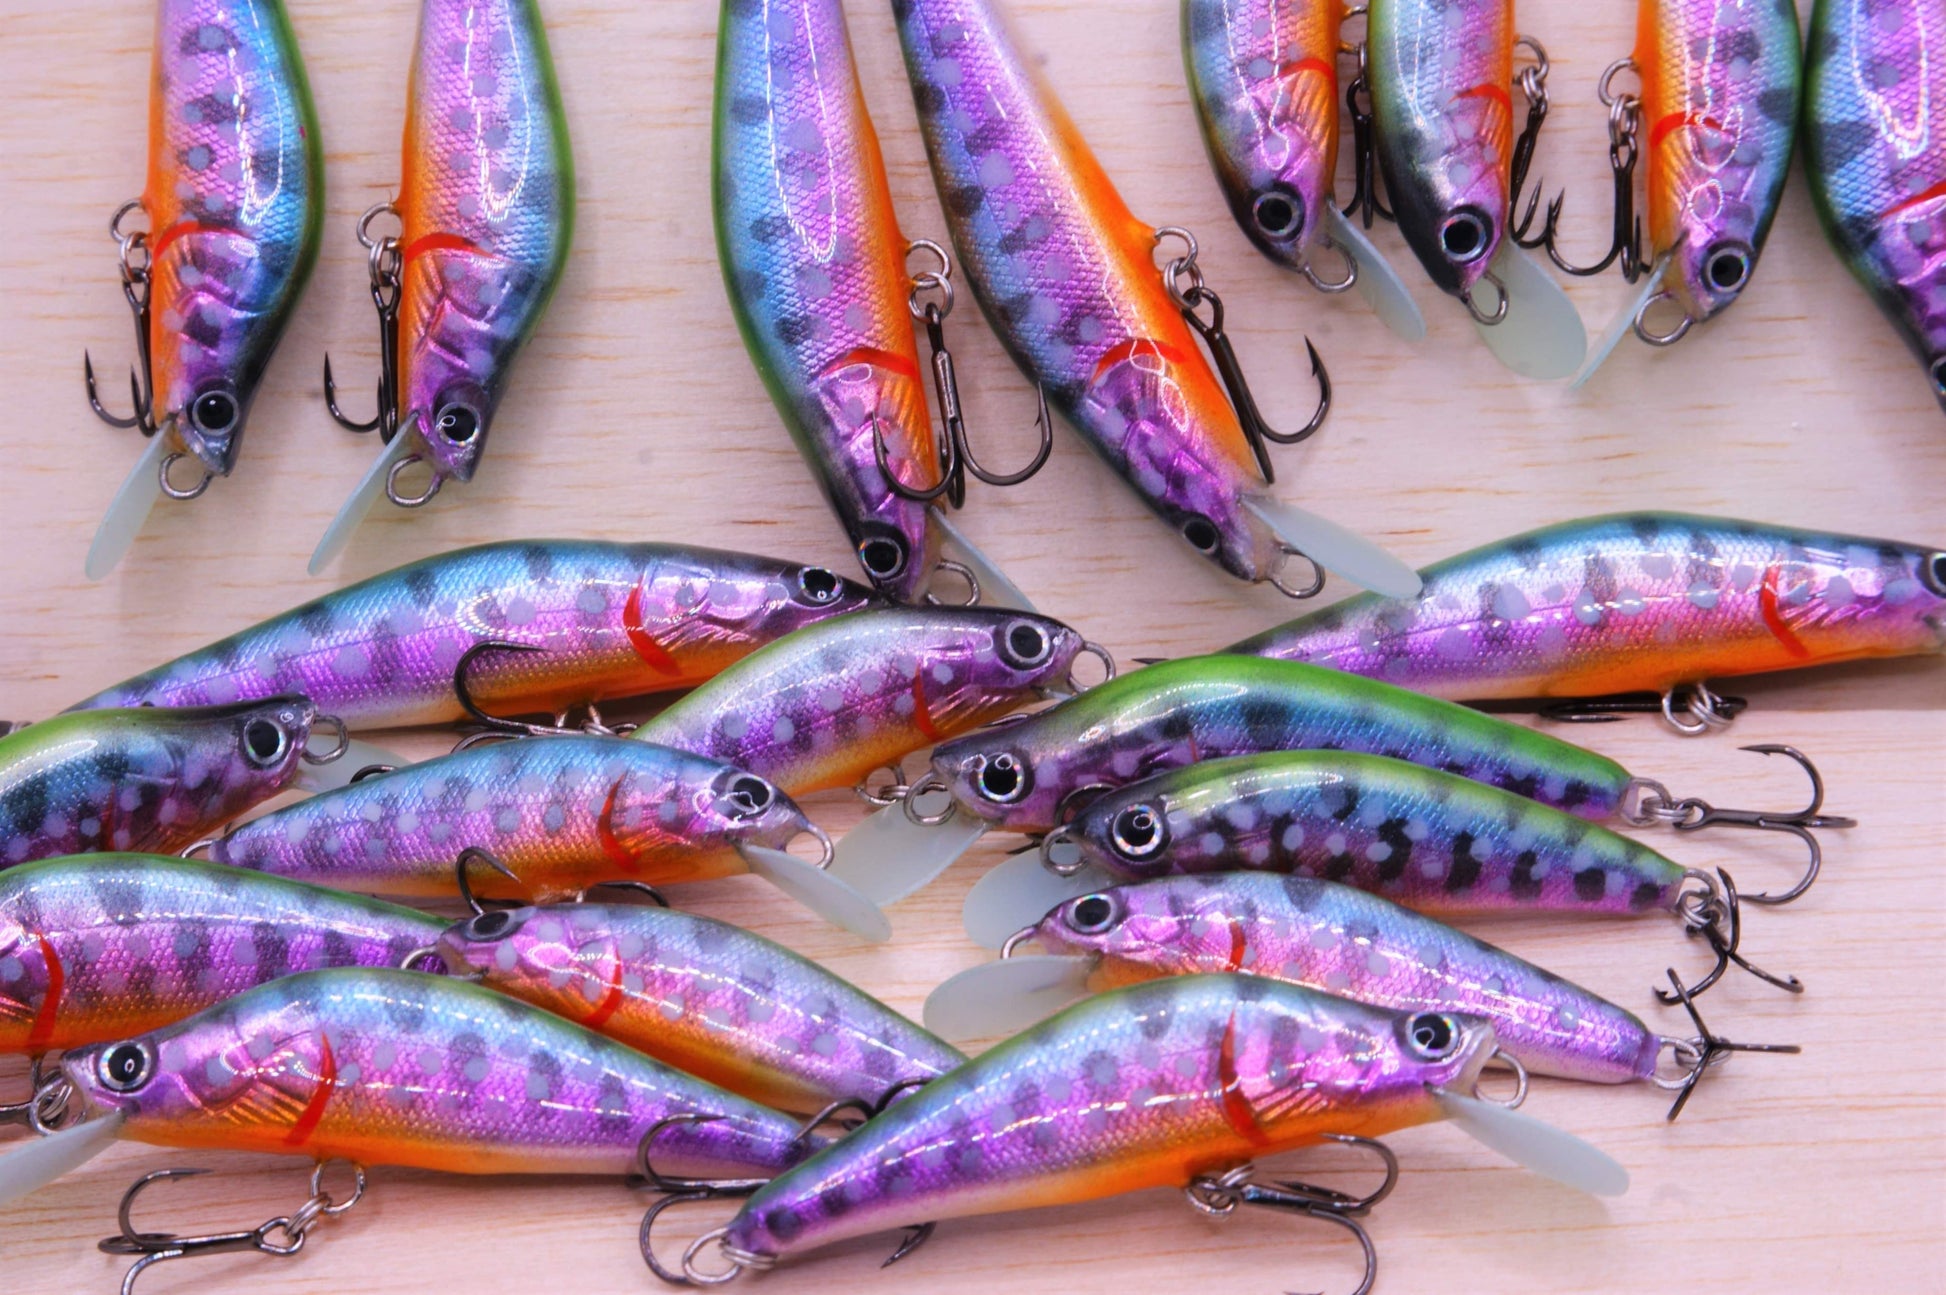 Pins Minnow Sinking 7Cm Purple Rainbow Trout 1/16Oz - Zone Chasse et Pêche  / Ecotone Val-d'Or